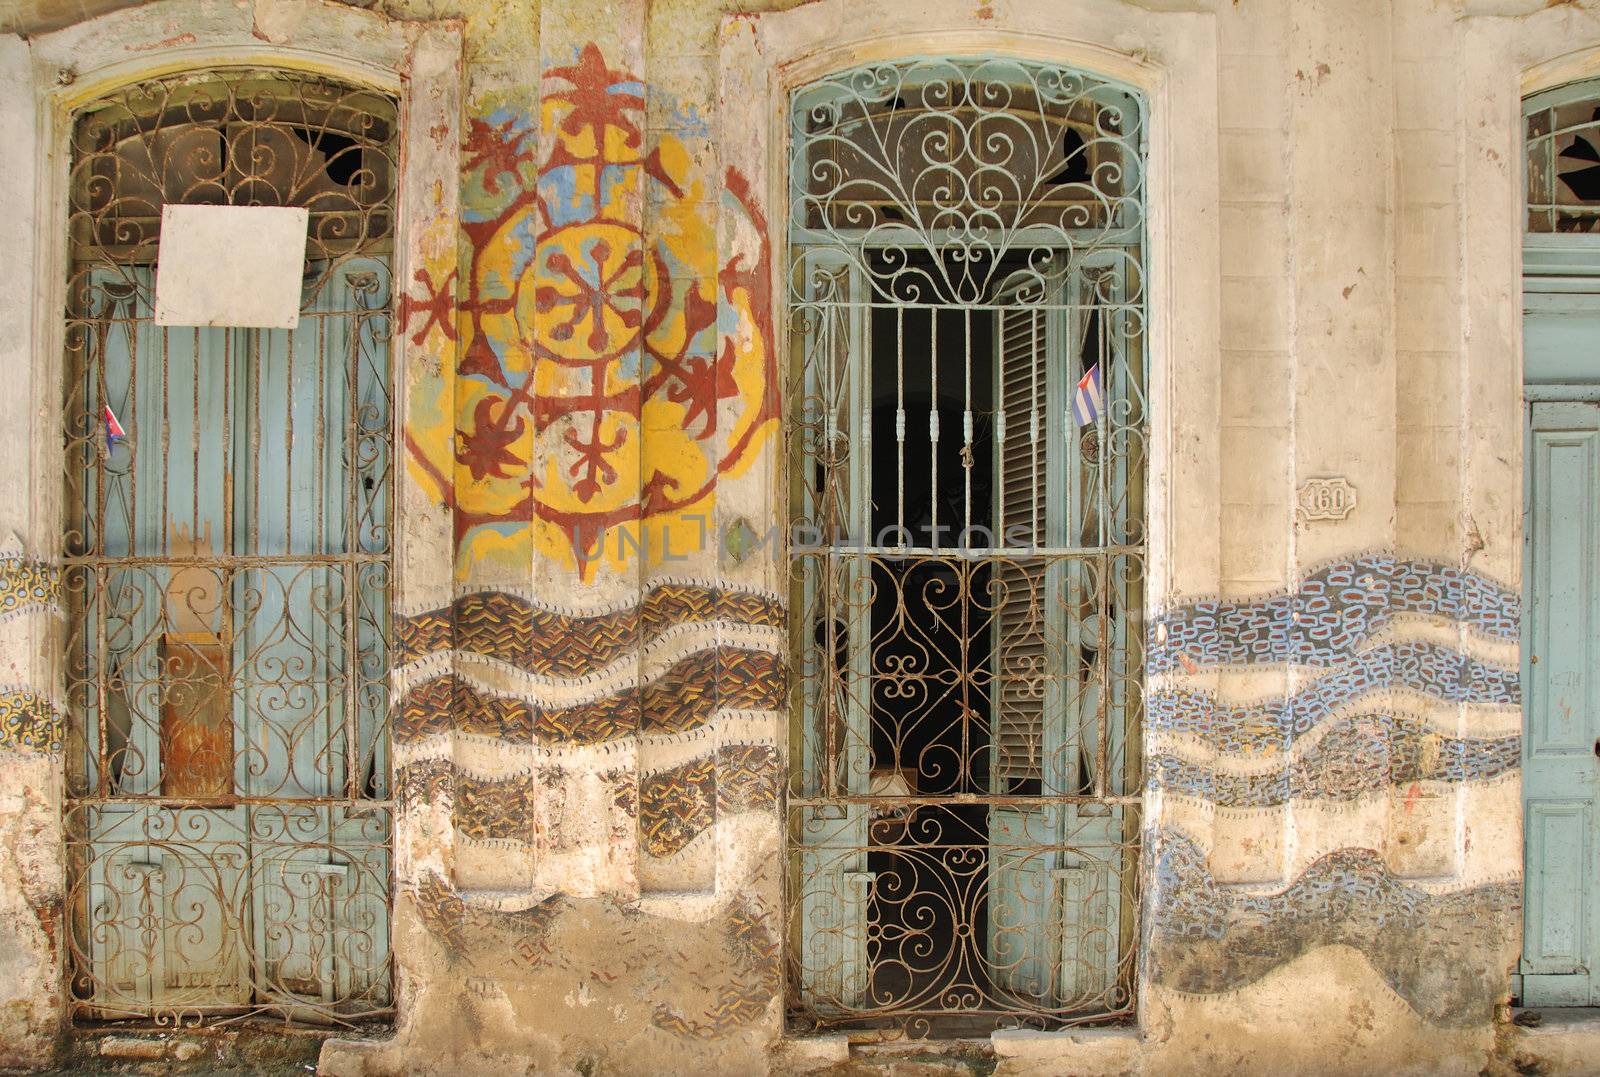 Abtract Havana facade by rgbspace